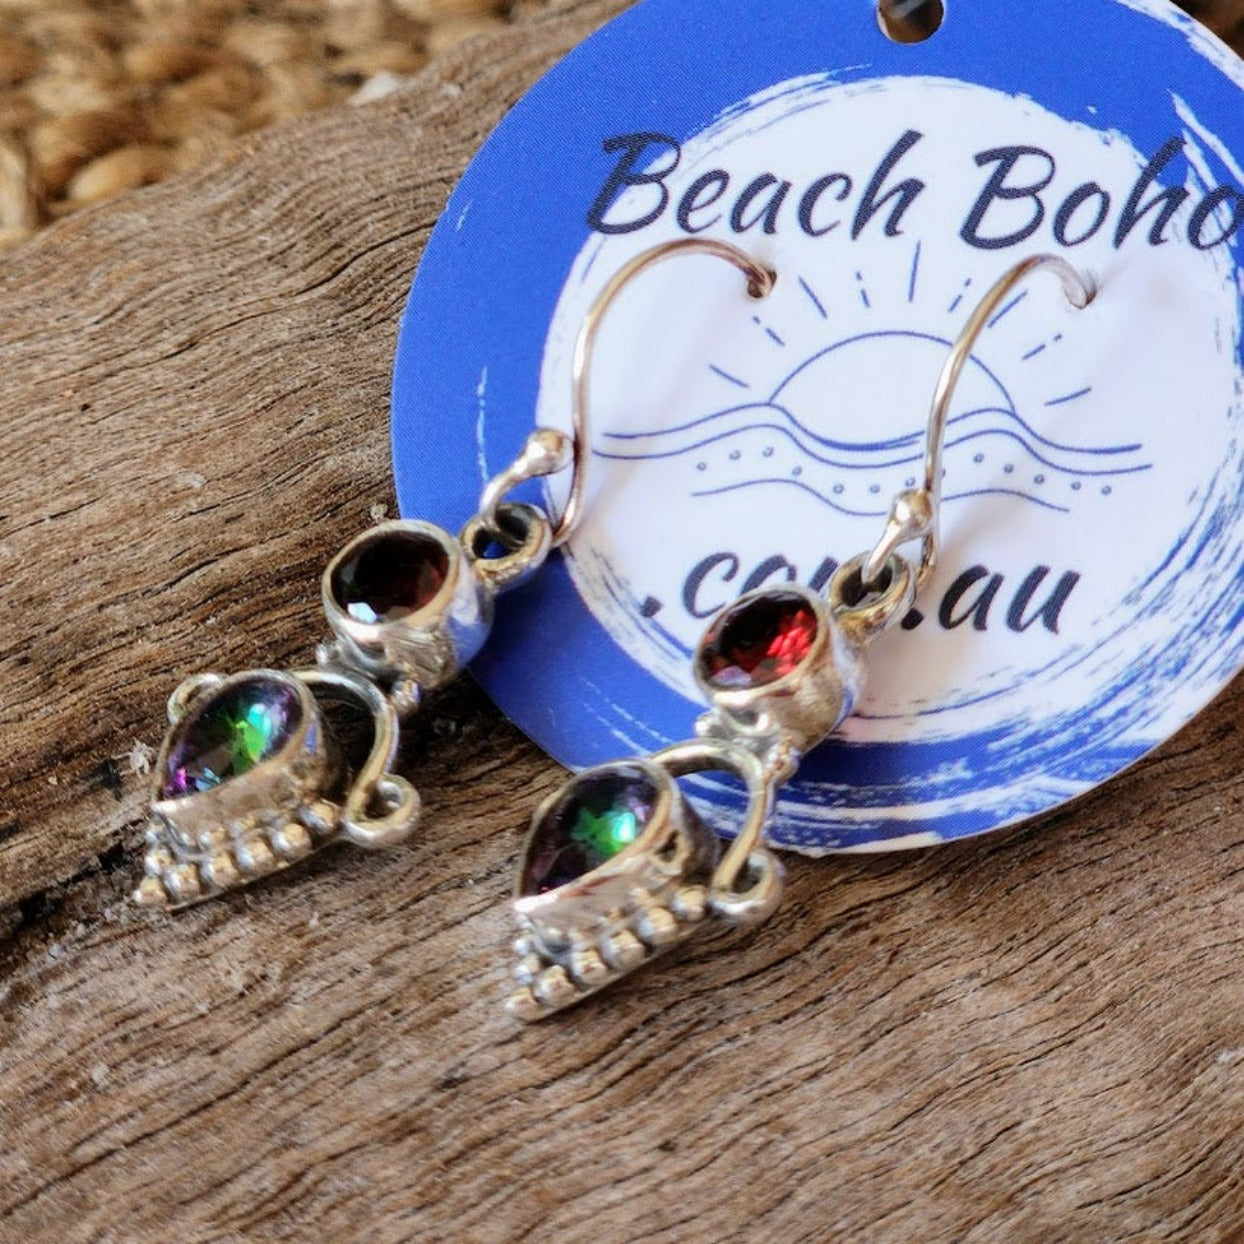 MYSTIC LUCK - MYSTIC TOPAZ & GARNET 925 HOOK EARRINGS - Premium earrings from www.beachboho.com.au - Just $60! Shop now at www.beachboho.com.au